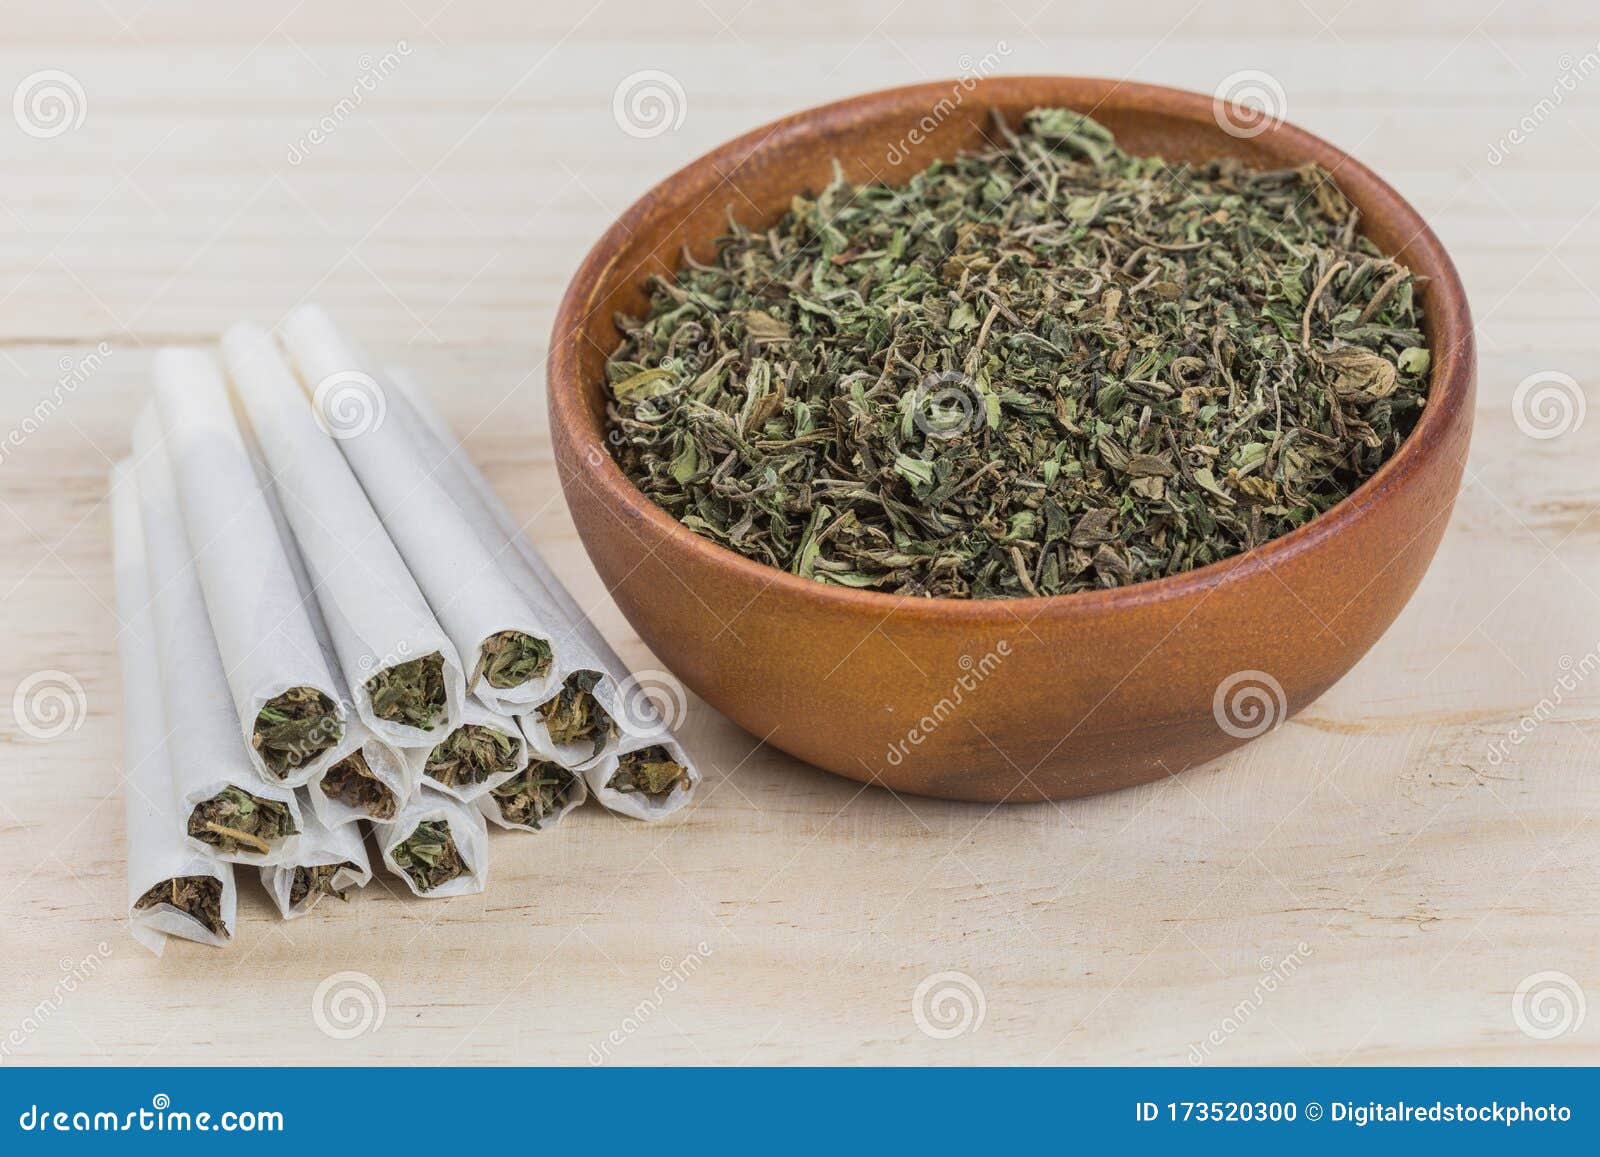 Close Up Shot Marijuana Weed Cannabis Wooden Bowl Rolled Joint Marijuana Wooden Bowl Rolled 173520300 